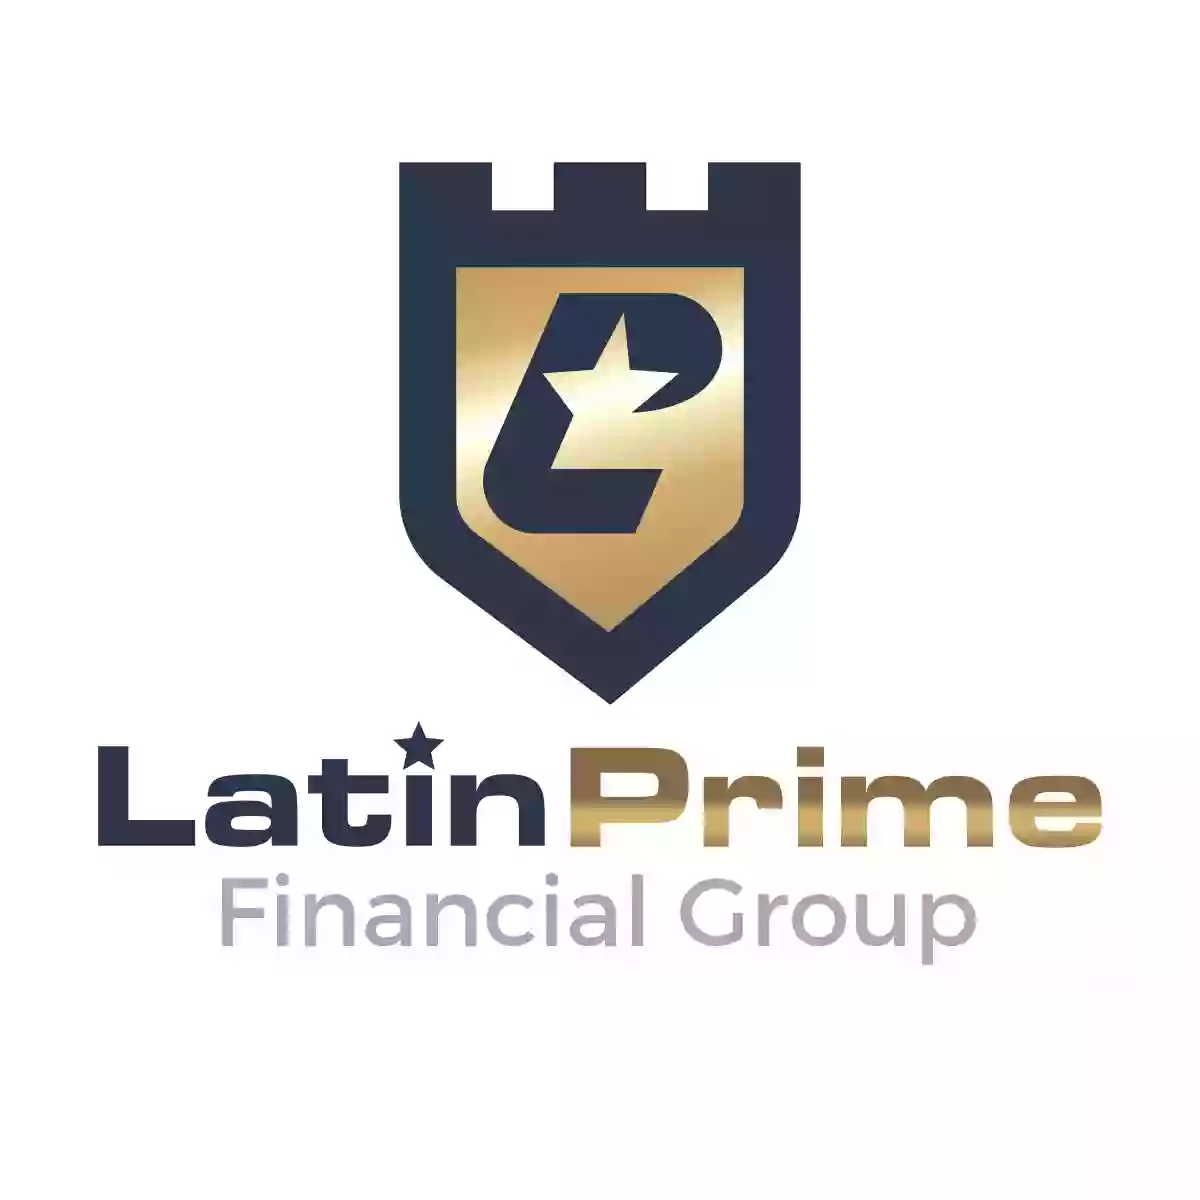 Latin Prime Financial Group